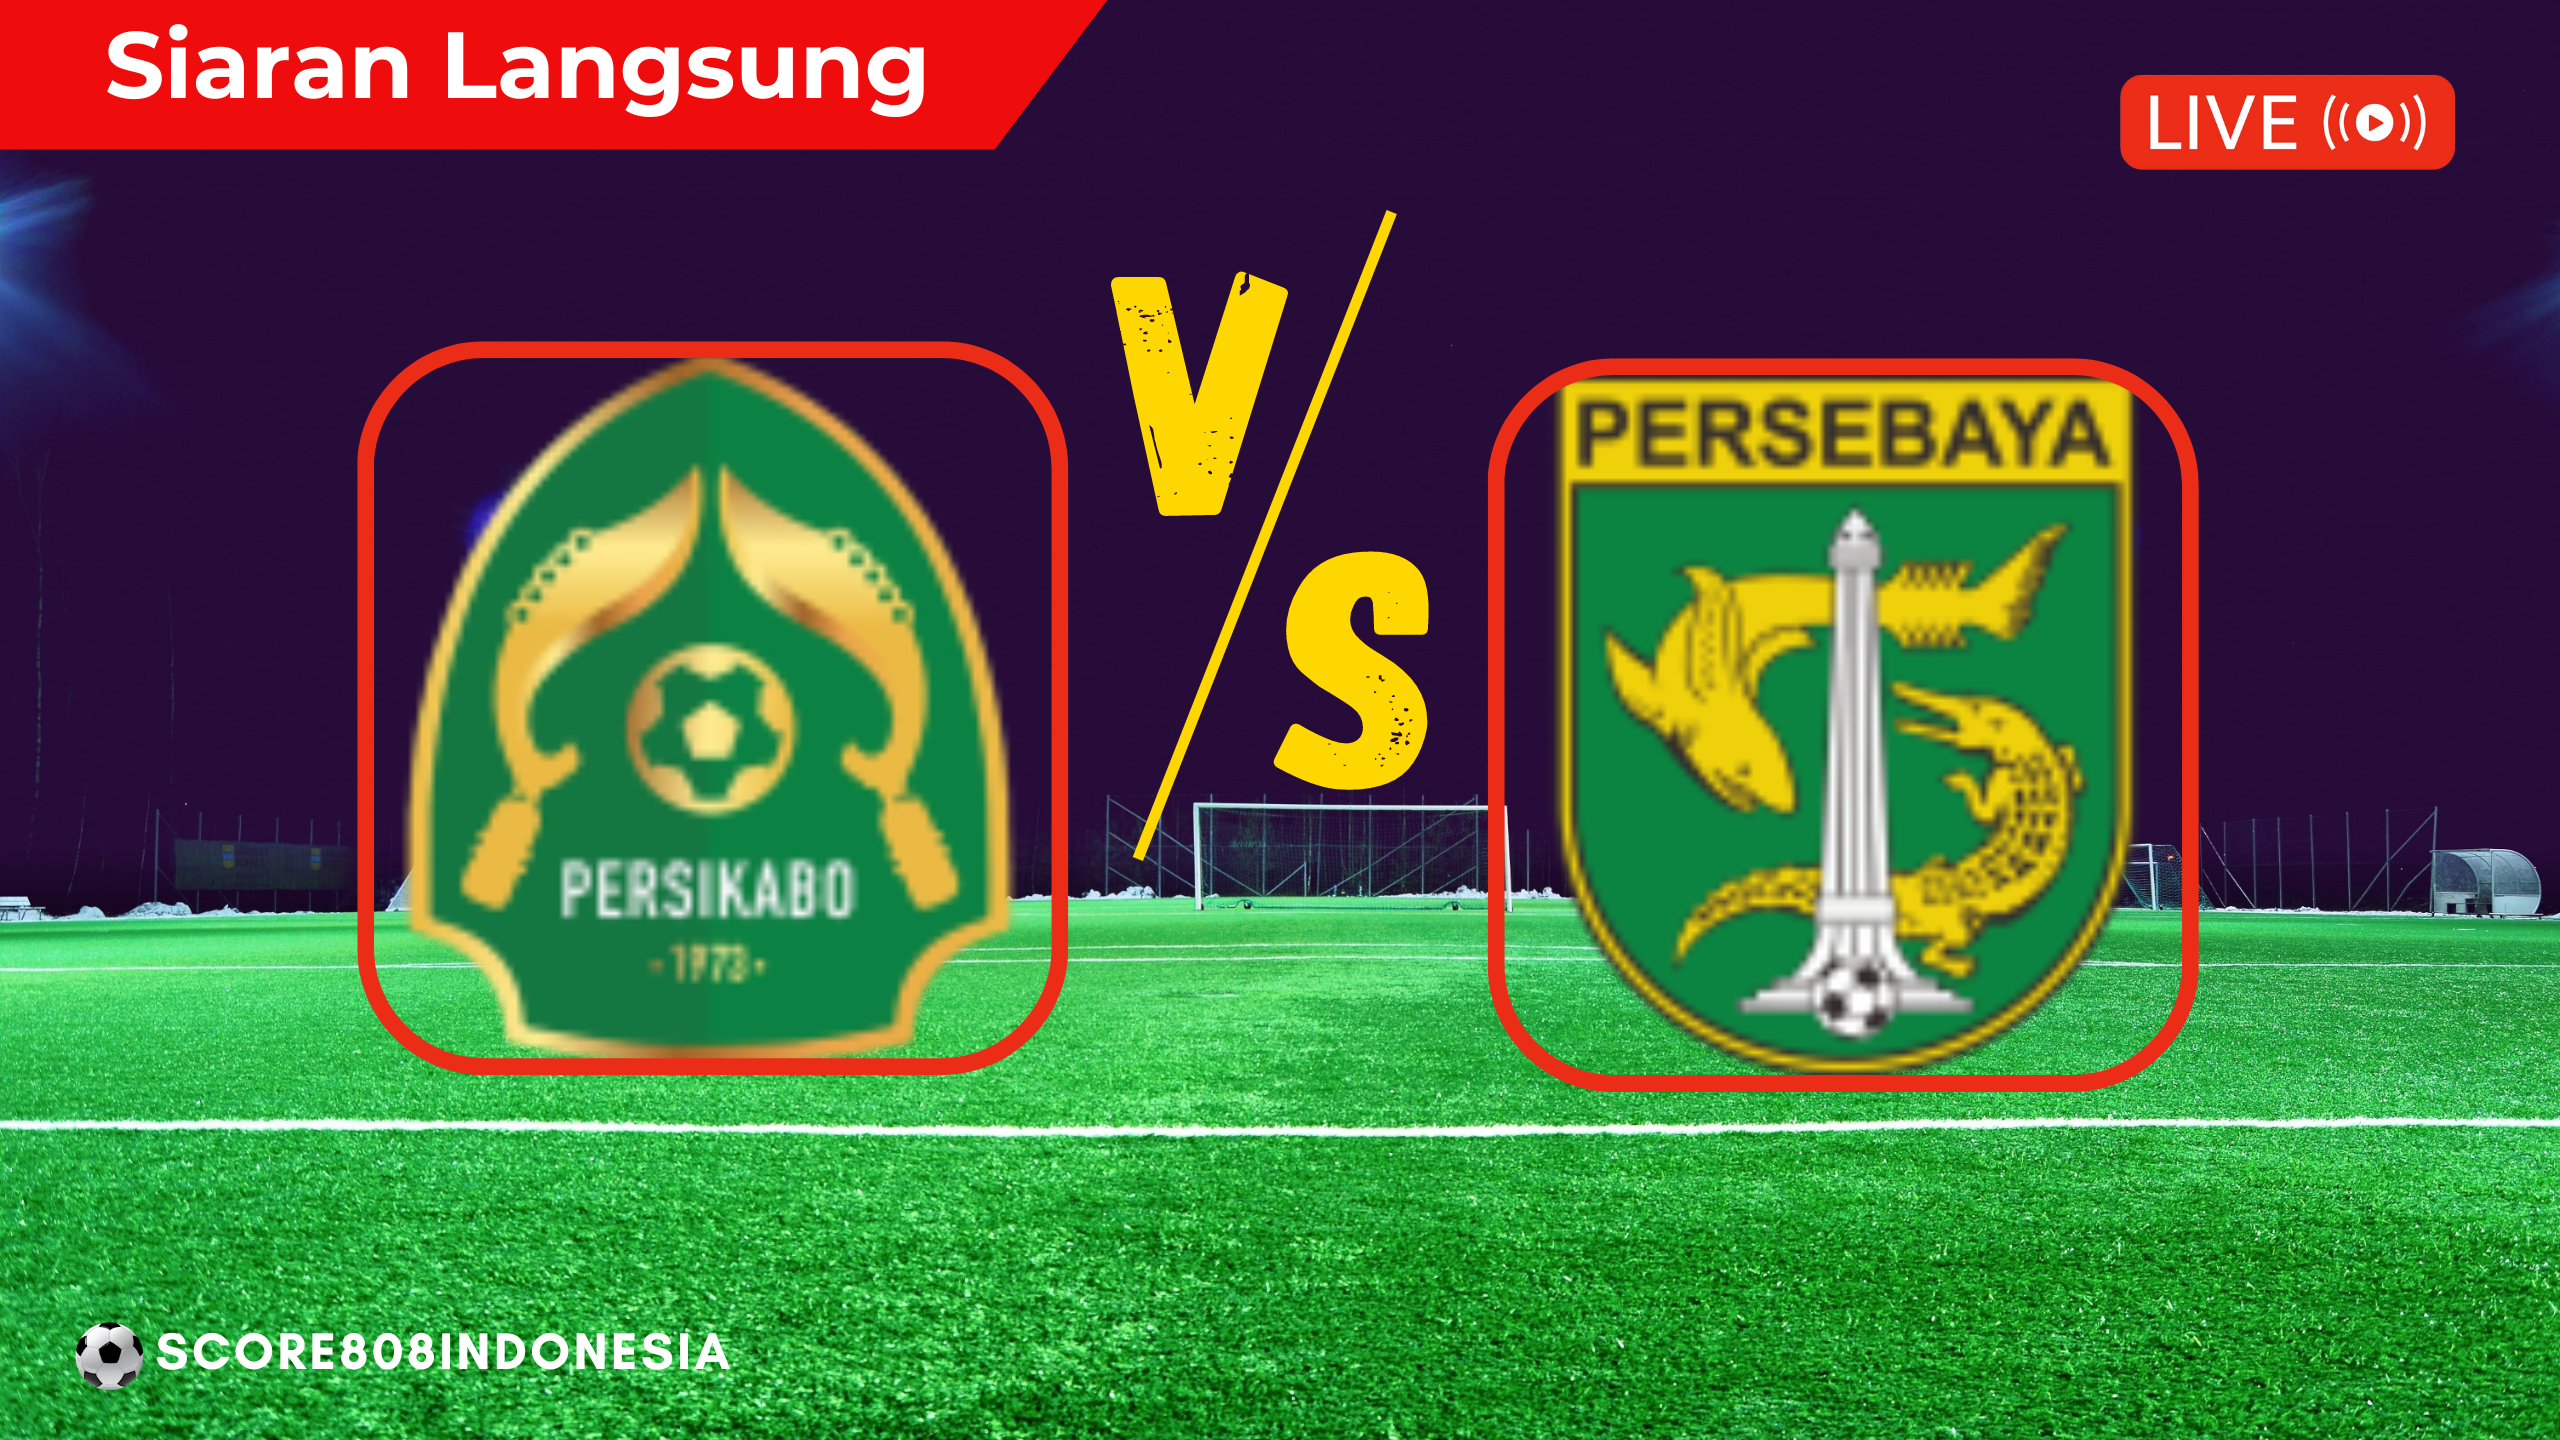 Persikabo 1973 vs Persebaya